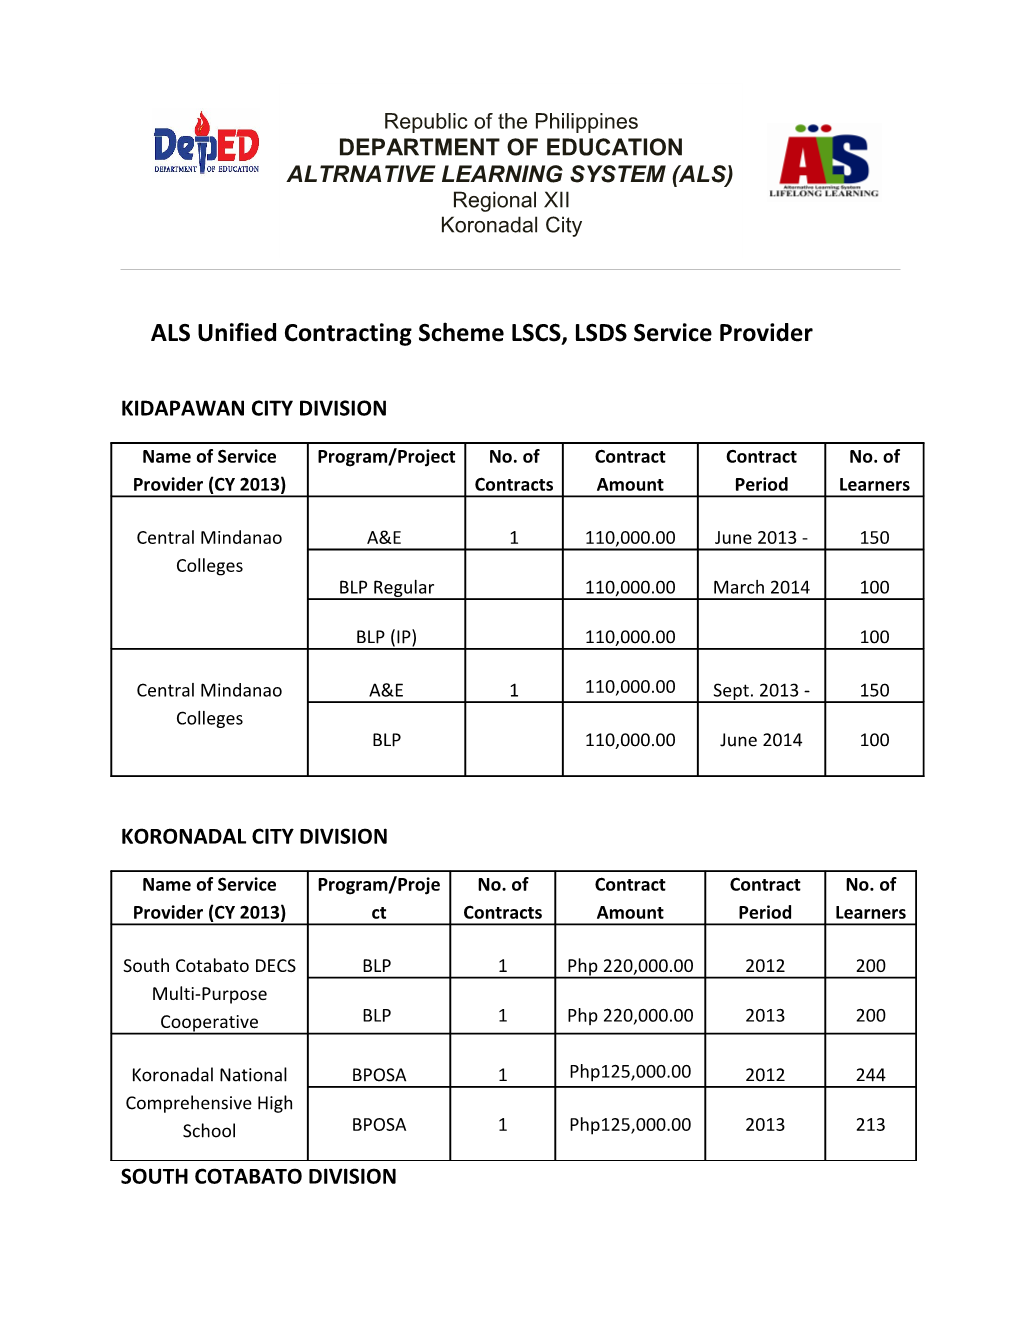 ALS Unified Contracting Scheme LSCS, LSDS Service Provider